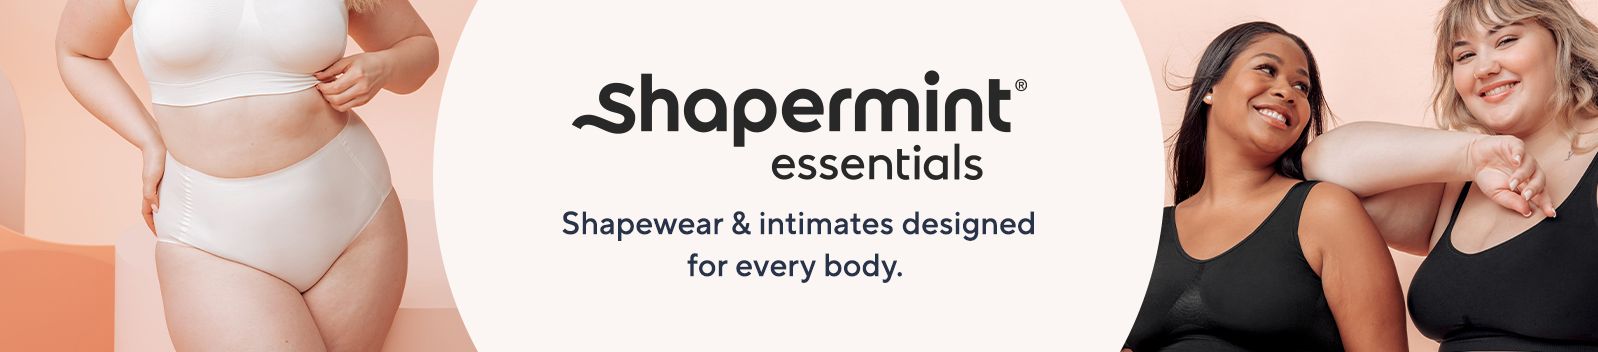 Shapermint, Intimates & Sleepwear, High Waisted Shaper Panty Empetua